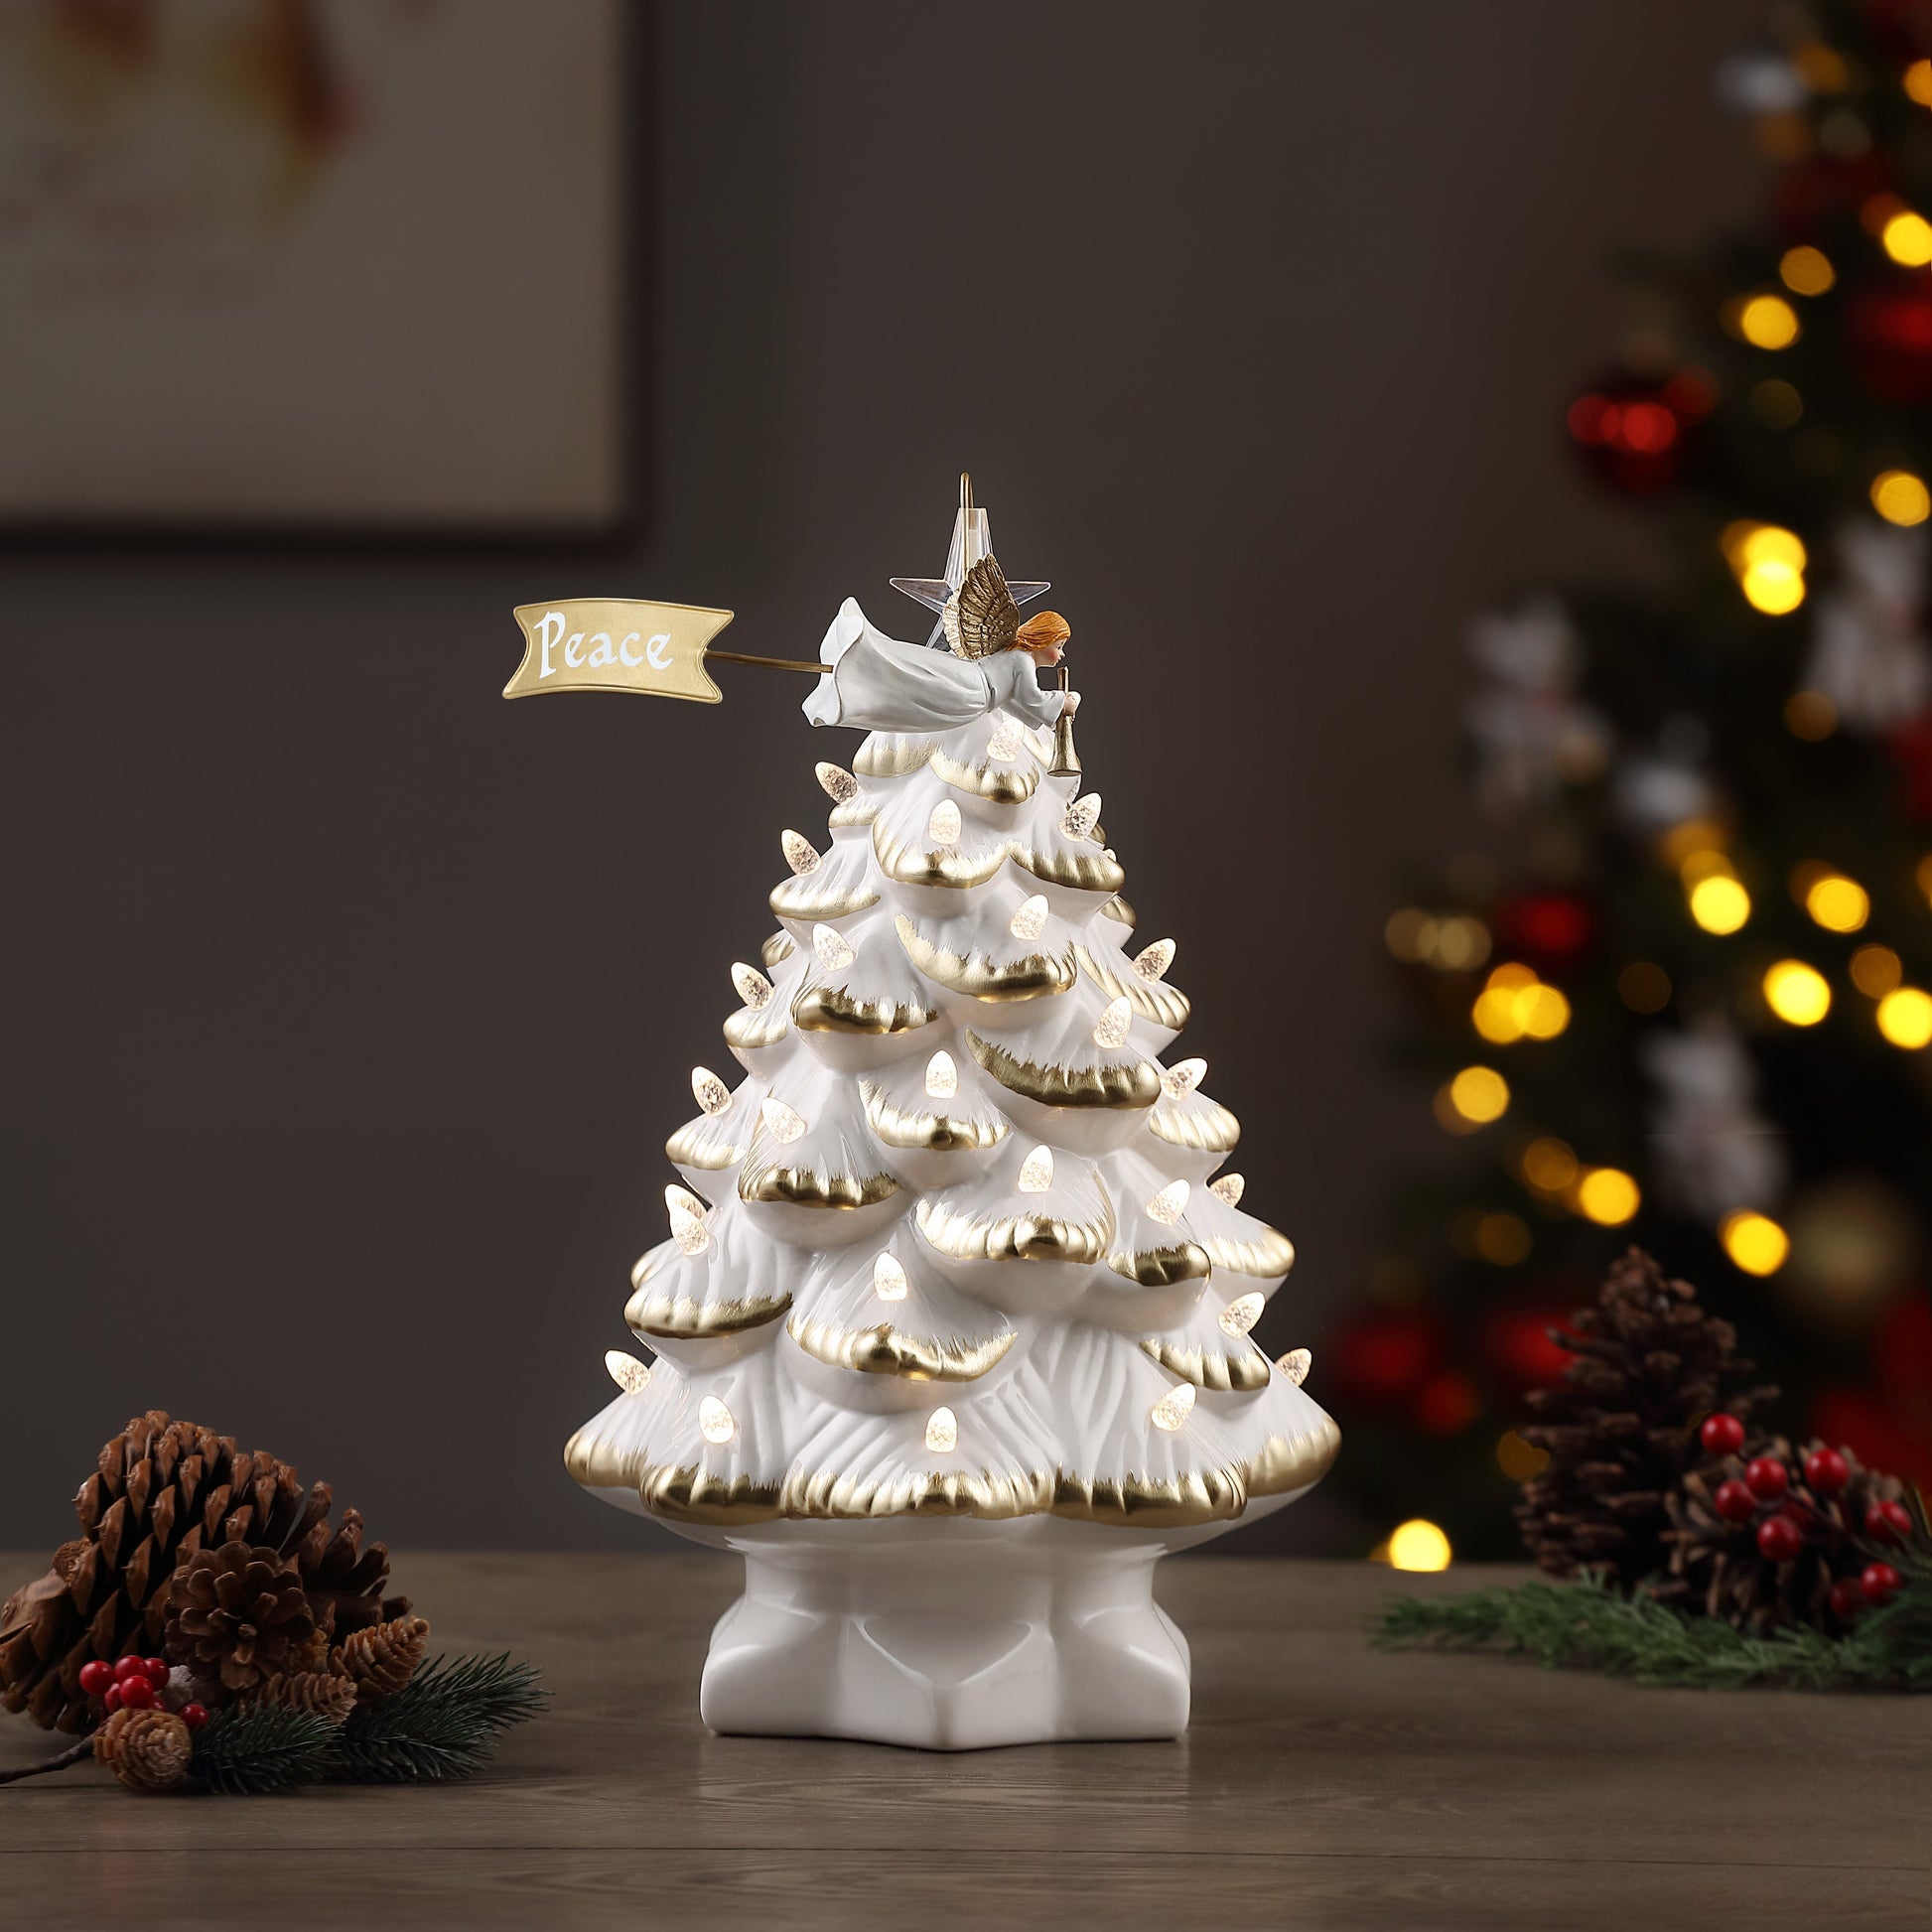 Mr. Christmas 14 White Nostalgic Tree